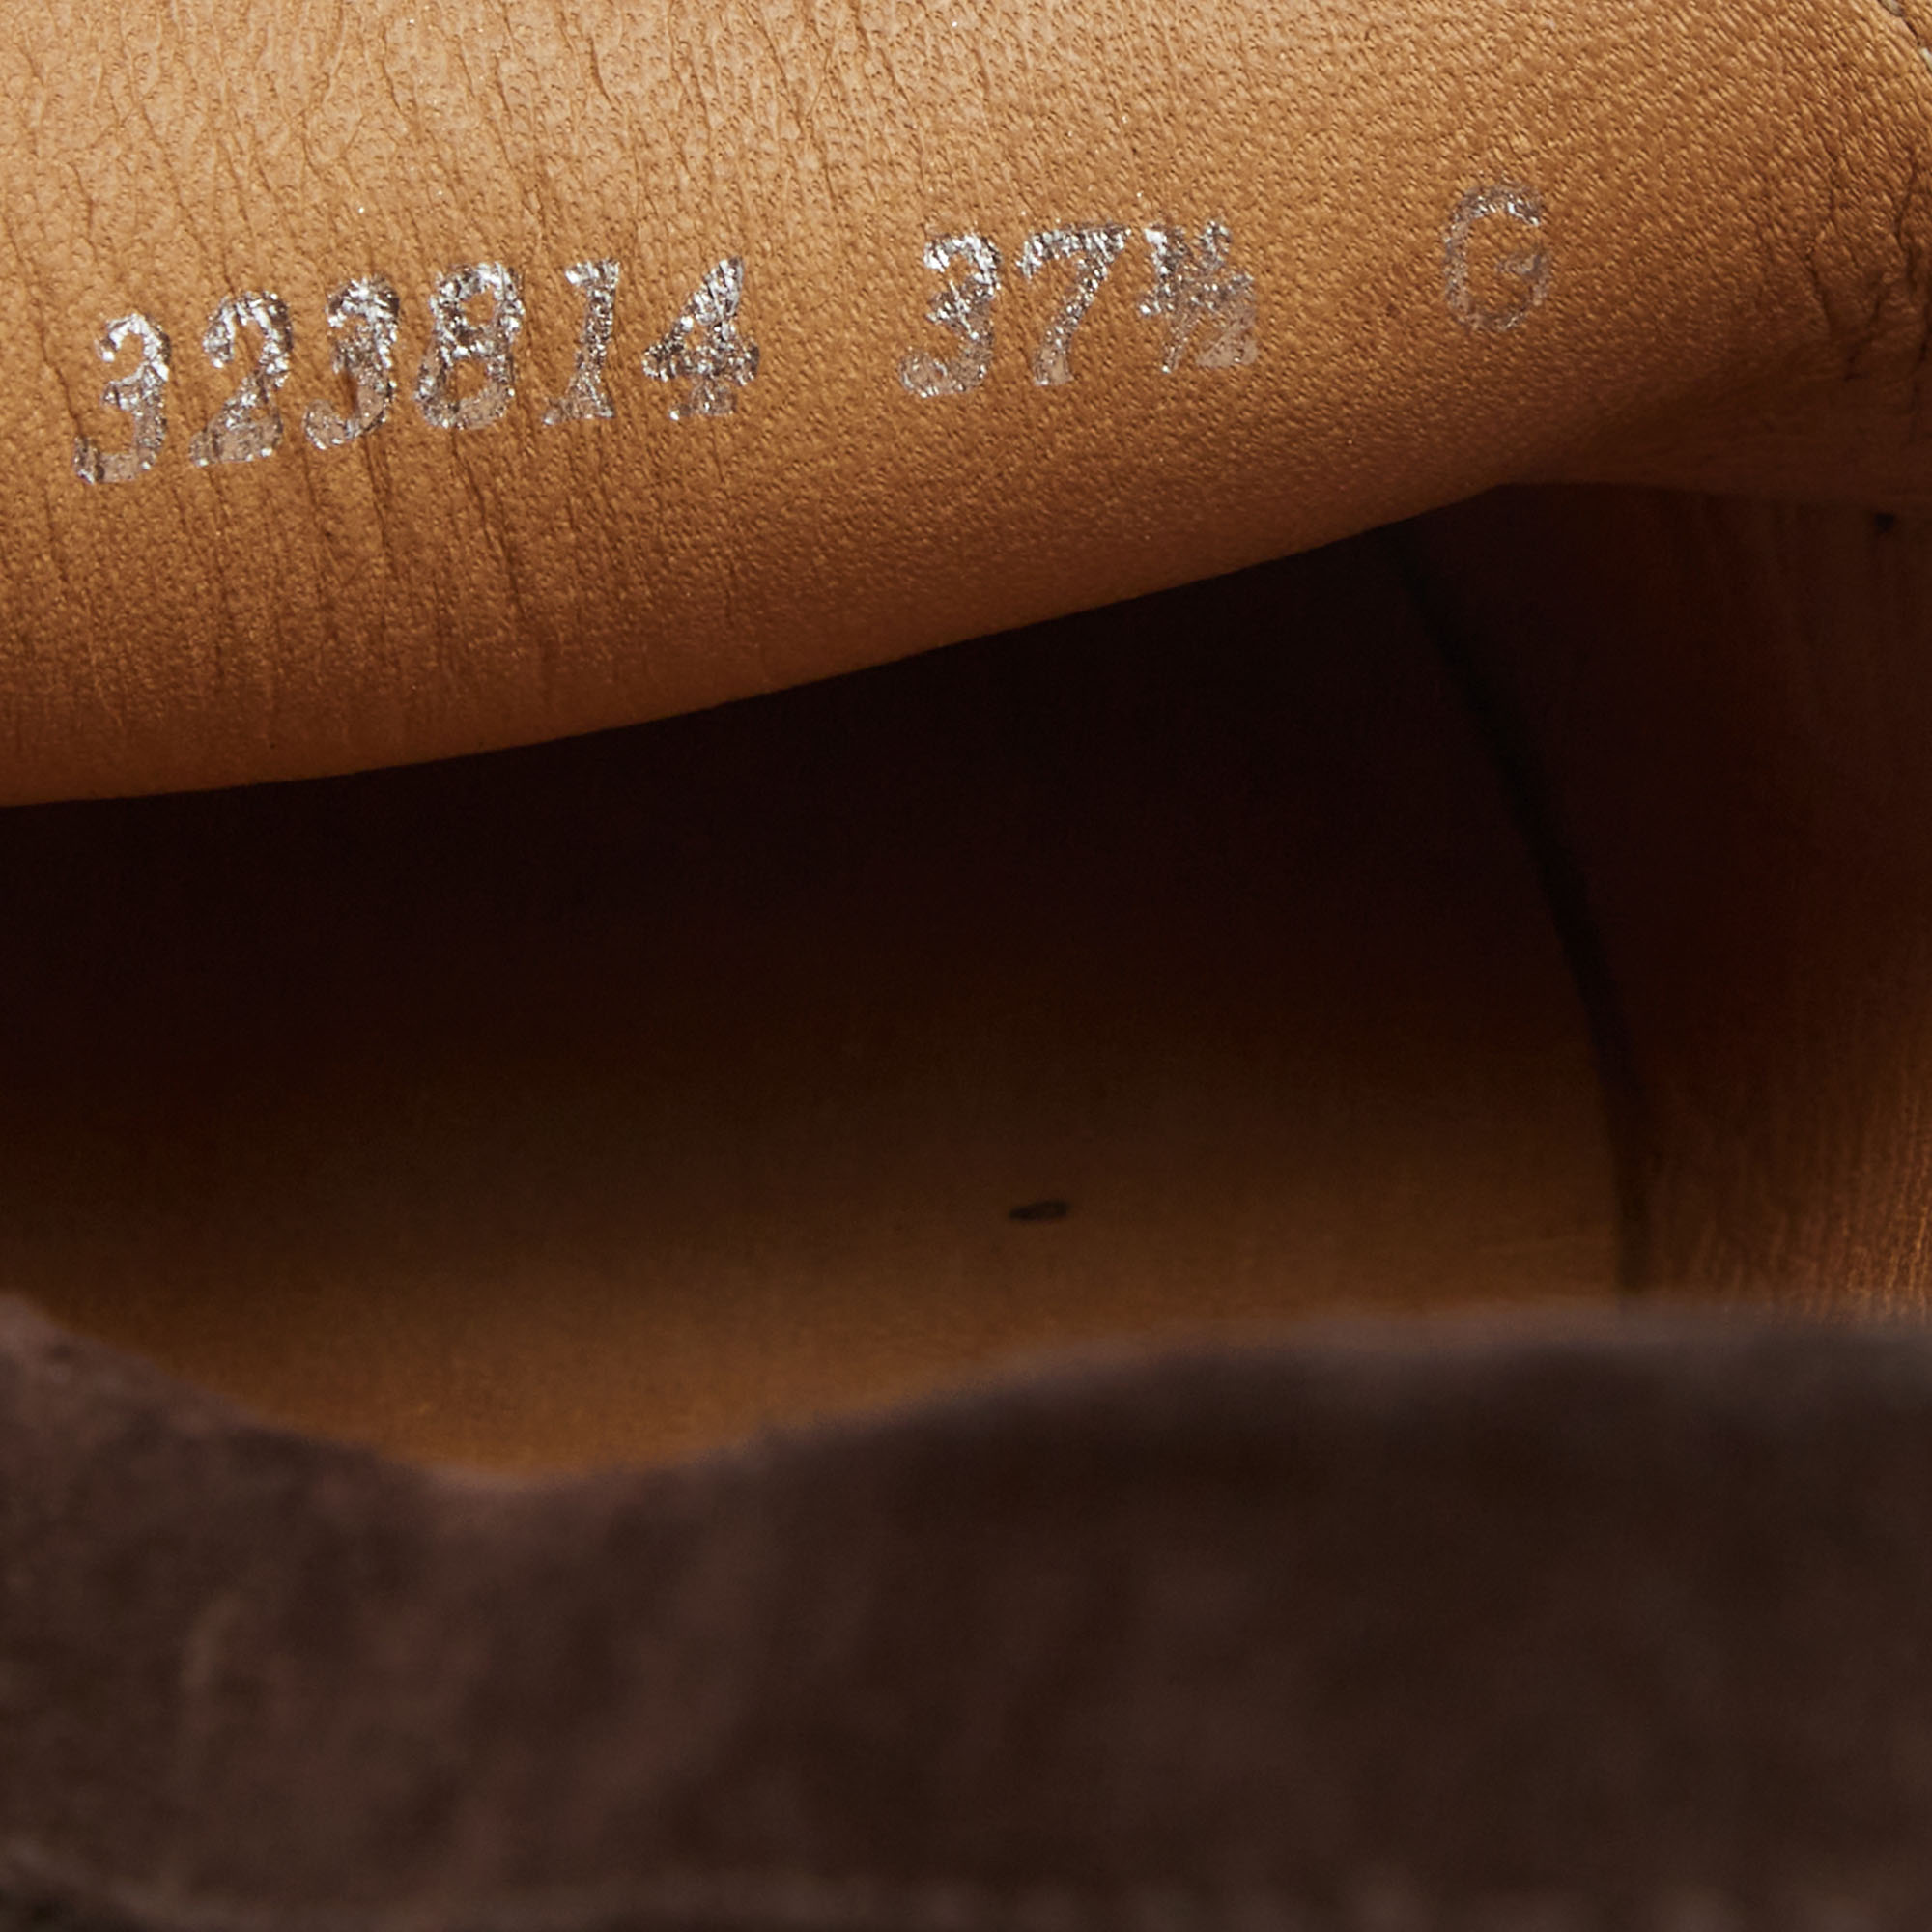 Gucci Brown Suede Interlocking G Logo Loafers Size 37.5